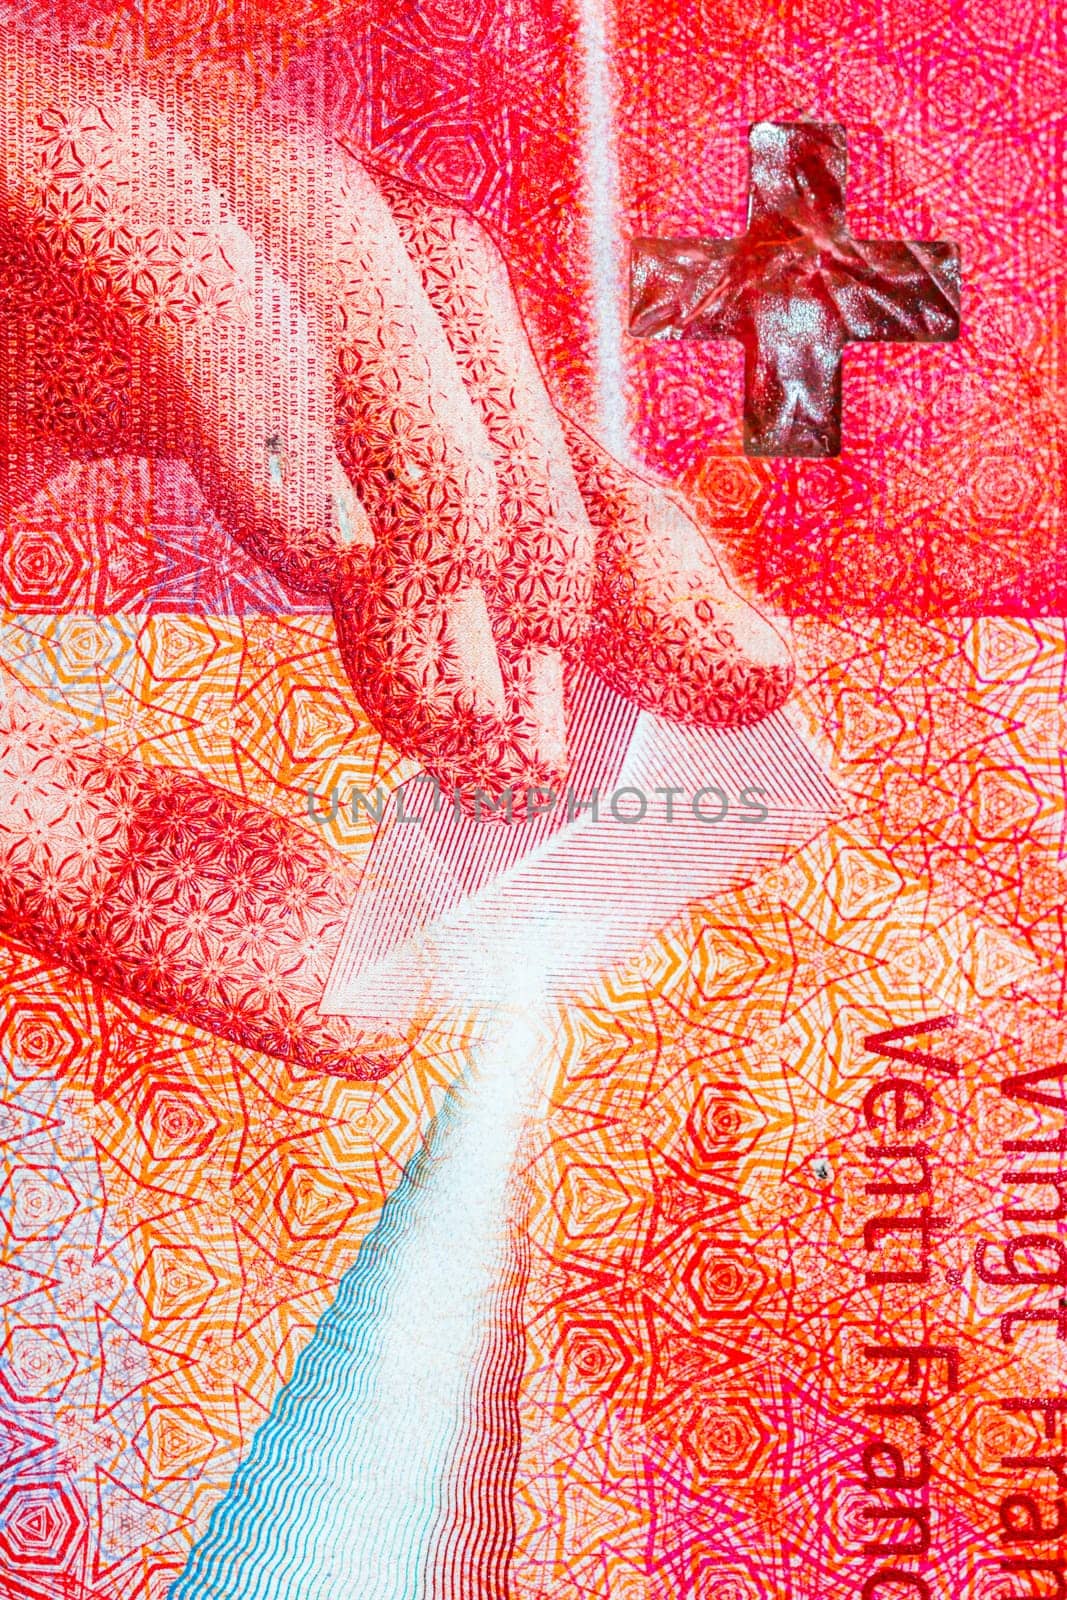 CHF money banknotes, detail photo of swiss franc by vladispas